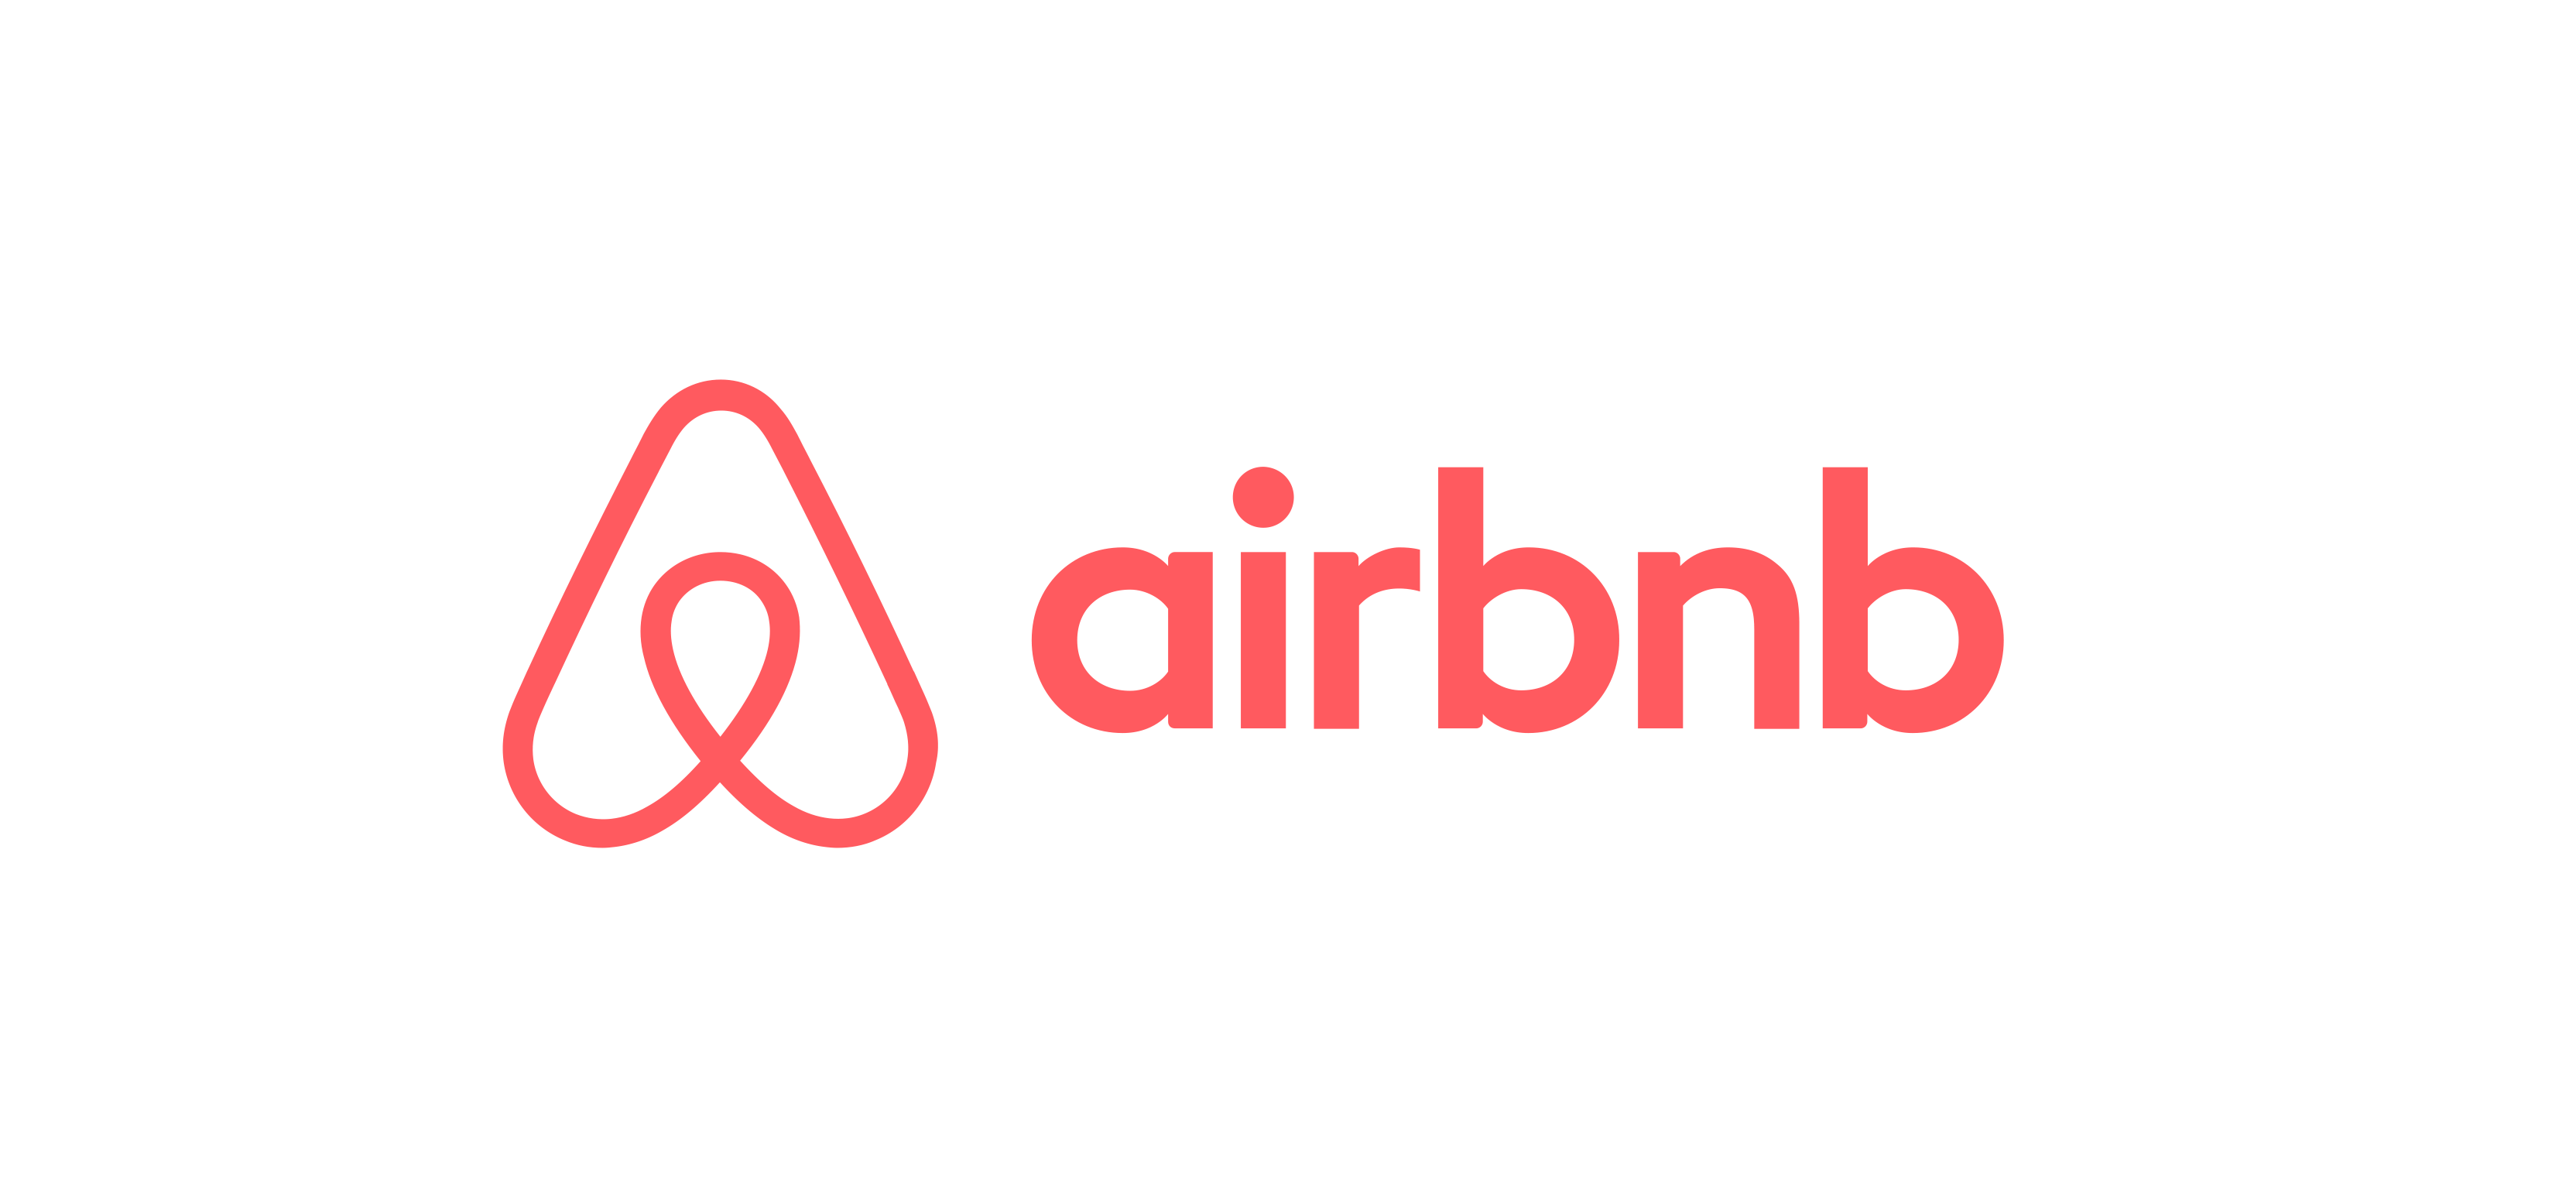 airbnb horizontal logo